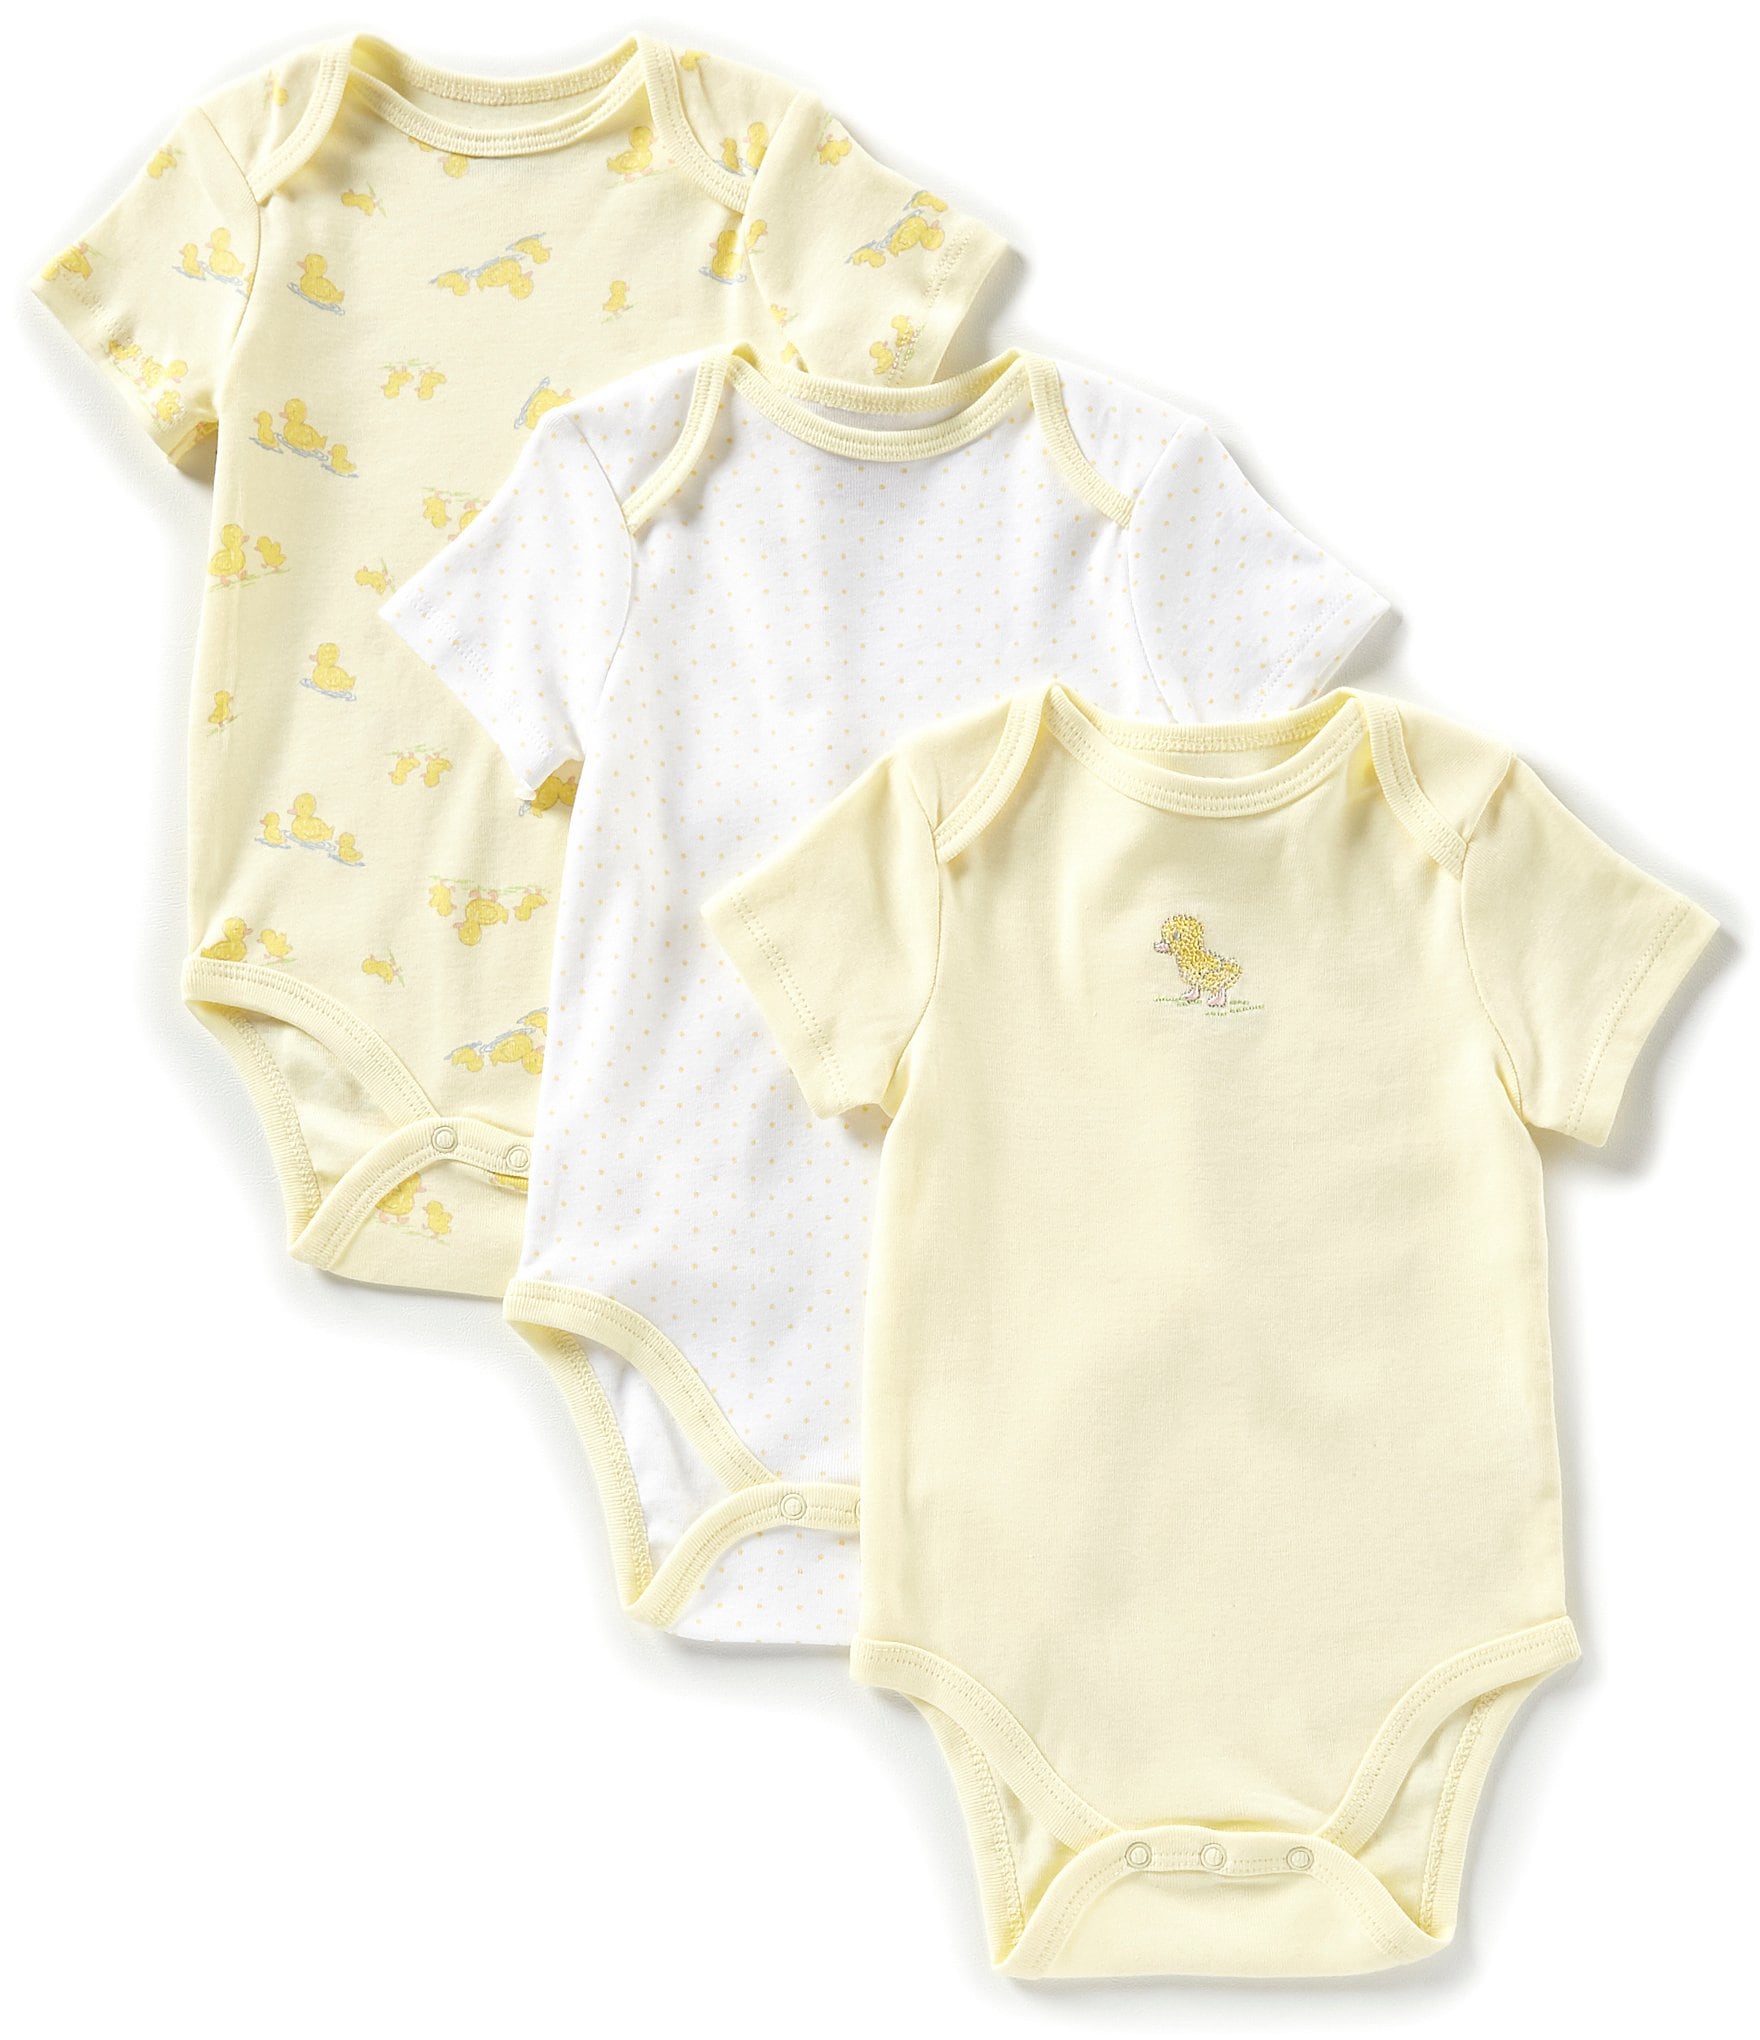 dillards infant clothes